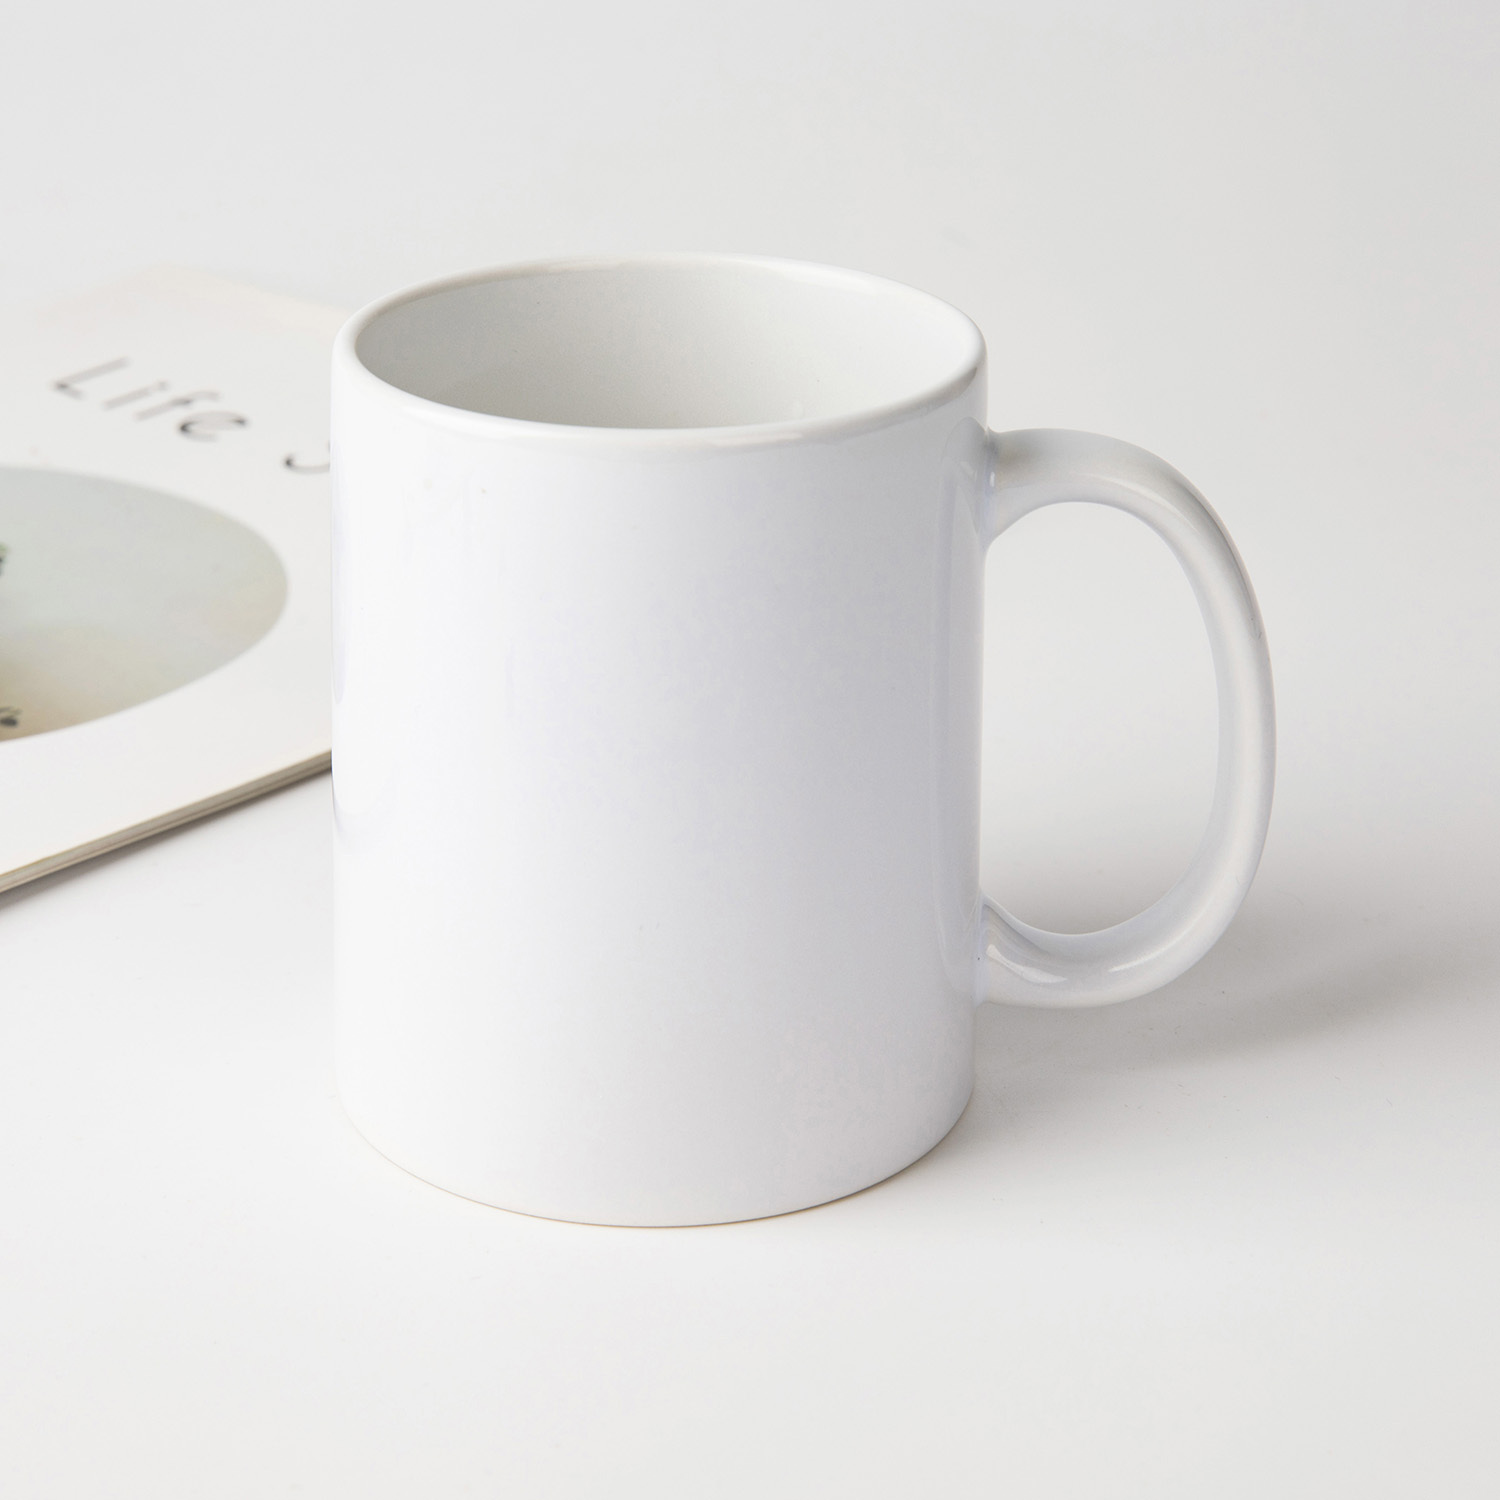 Print On Demand White Ceramic Mug - Print On Demand | HugePOD-2